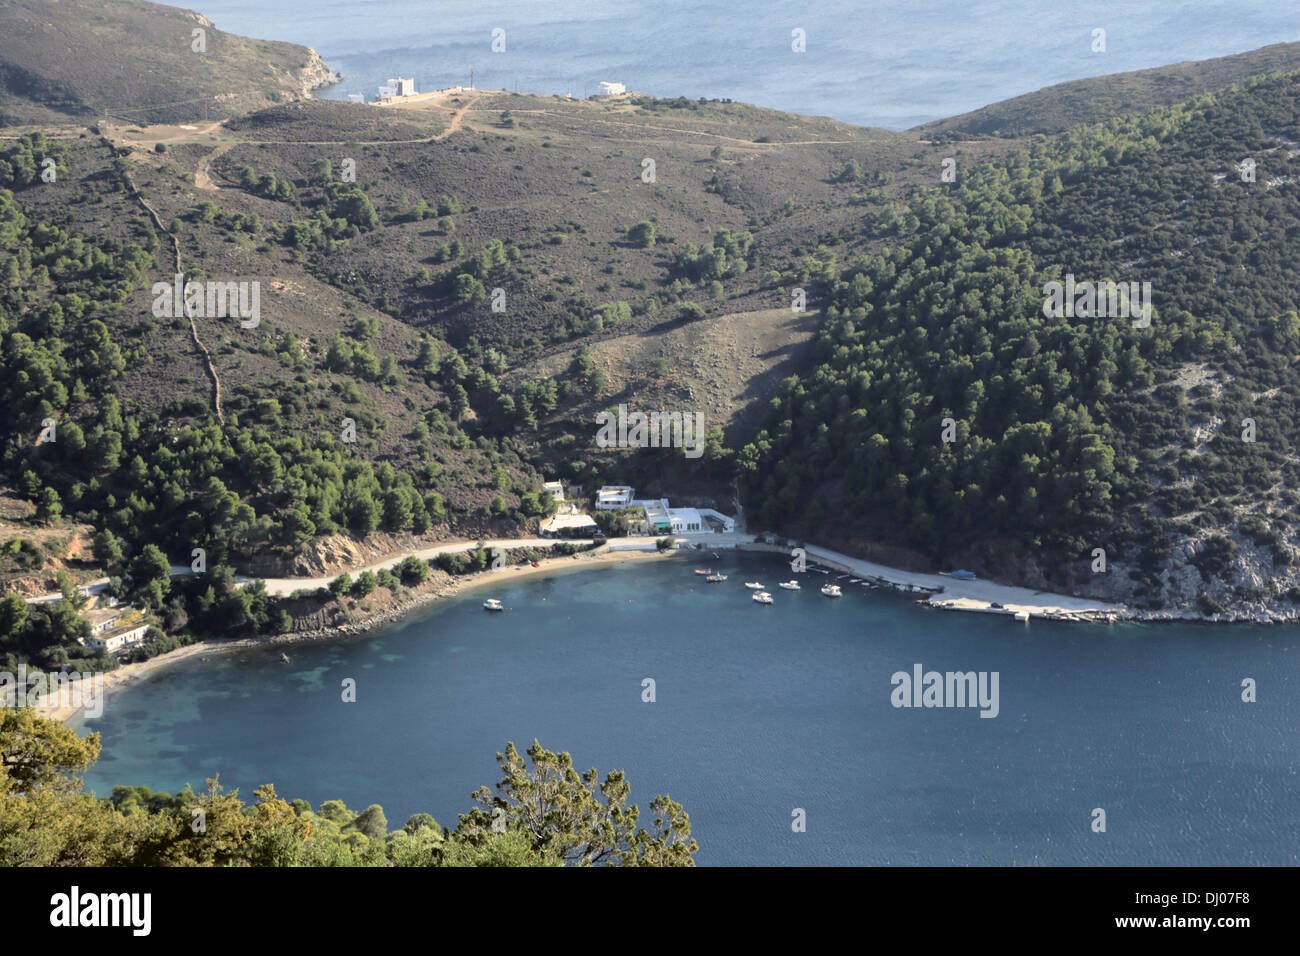 Greece, Skyros island, Aegean Stock Photo